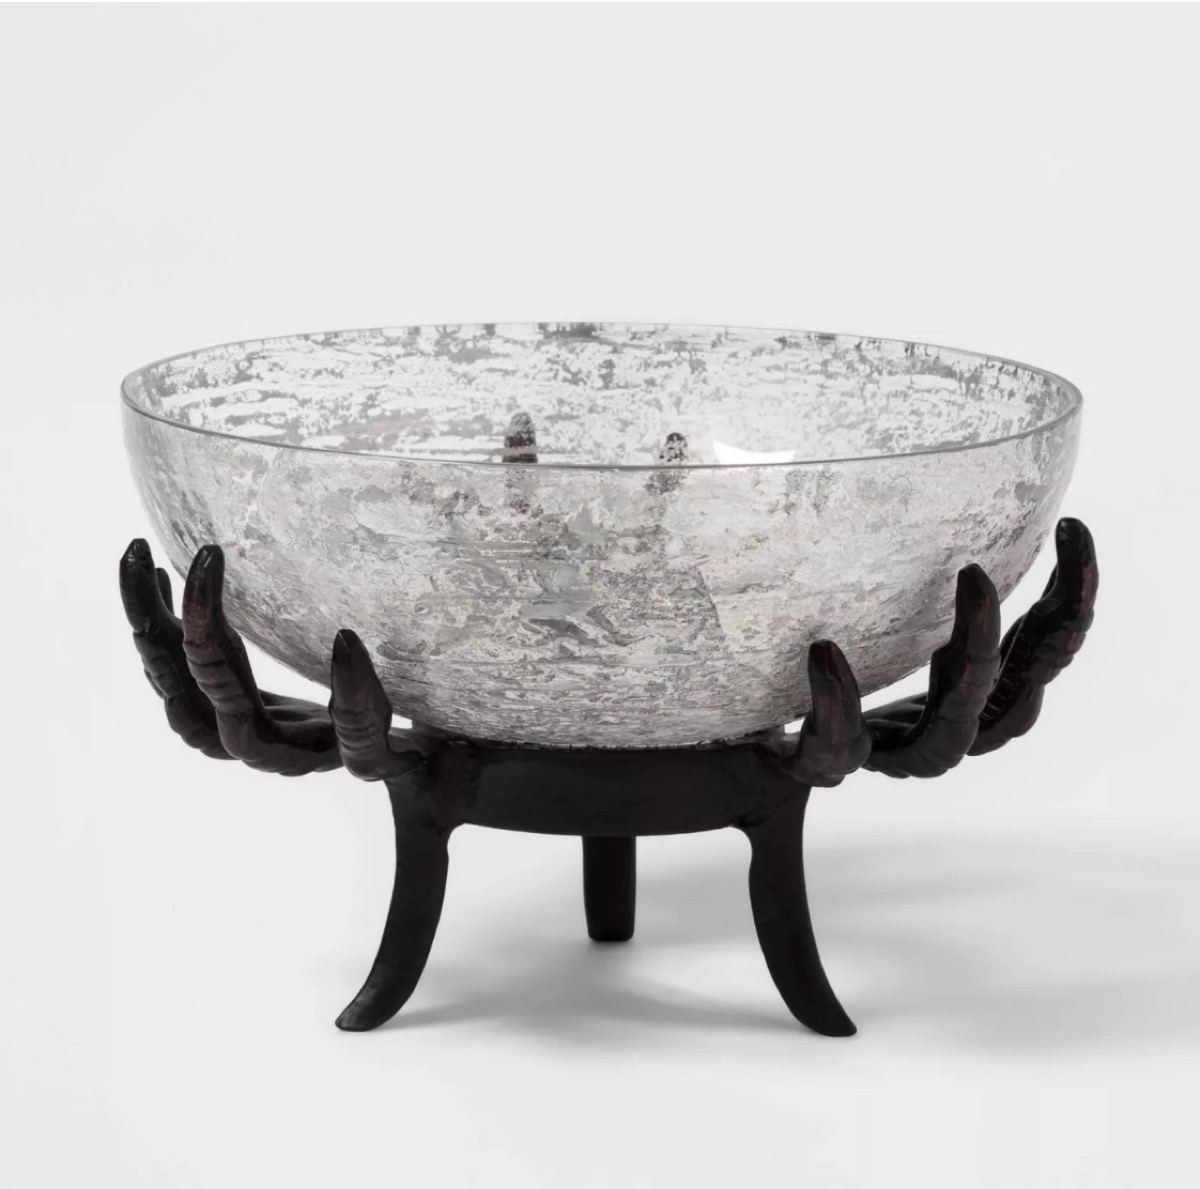 glass serving bowl on black ceramic hands, target halloween decor